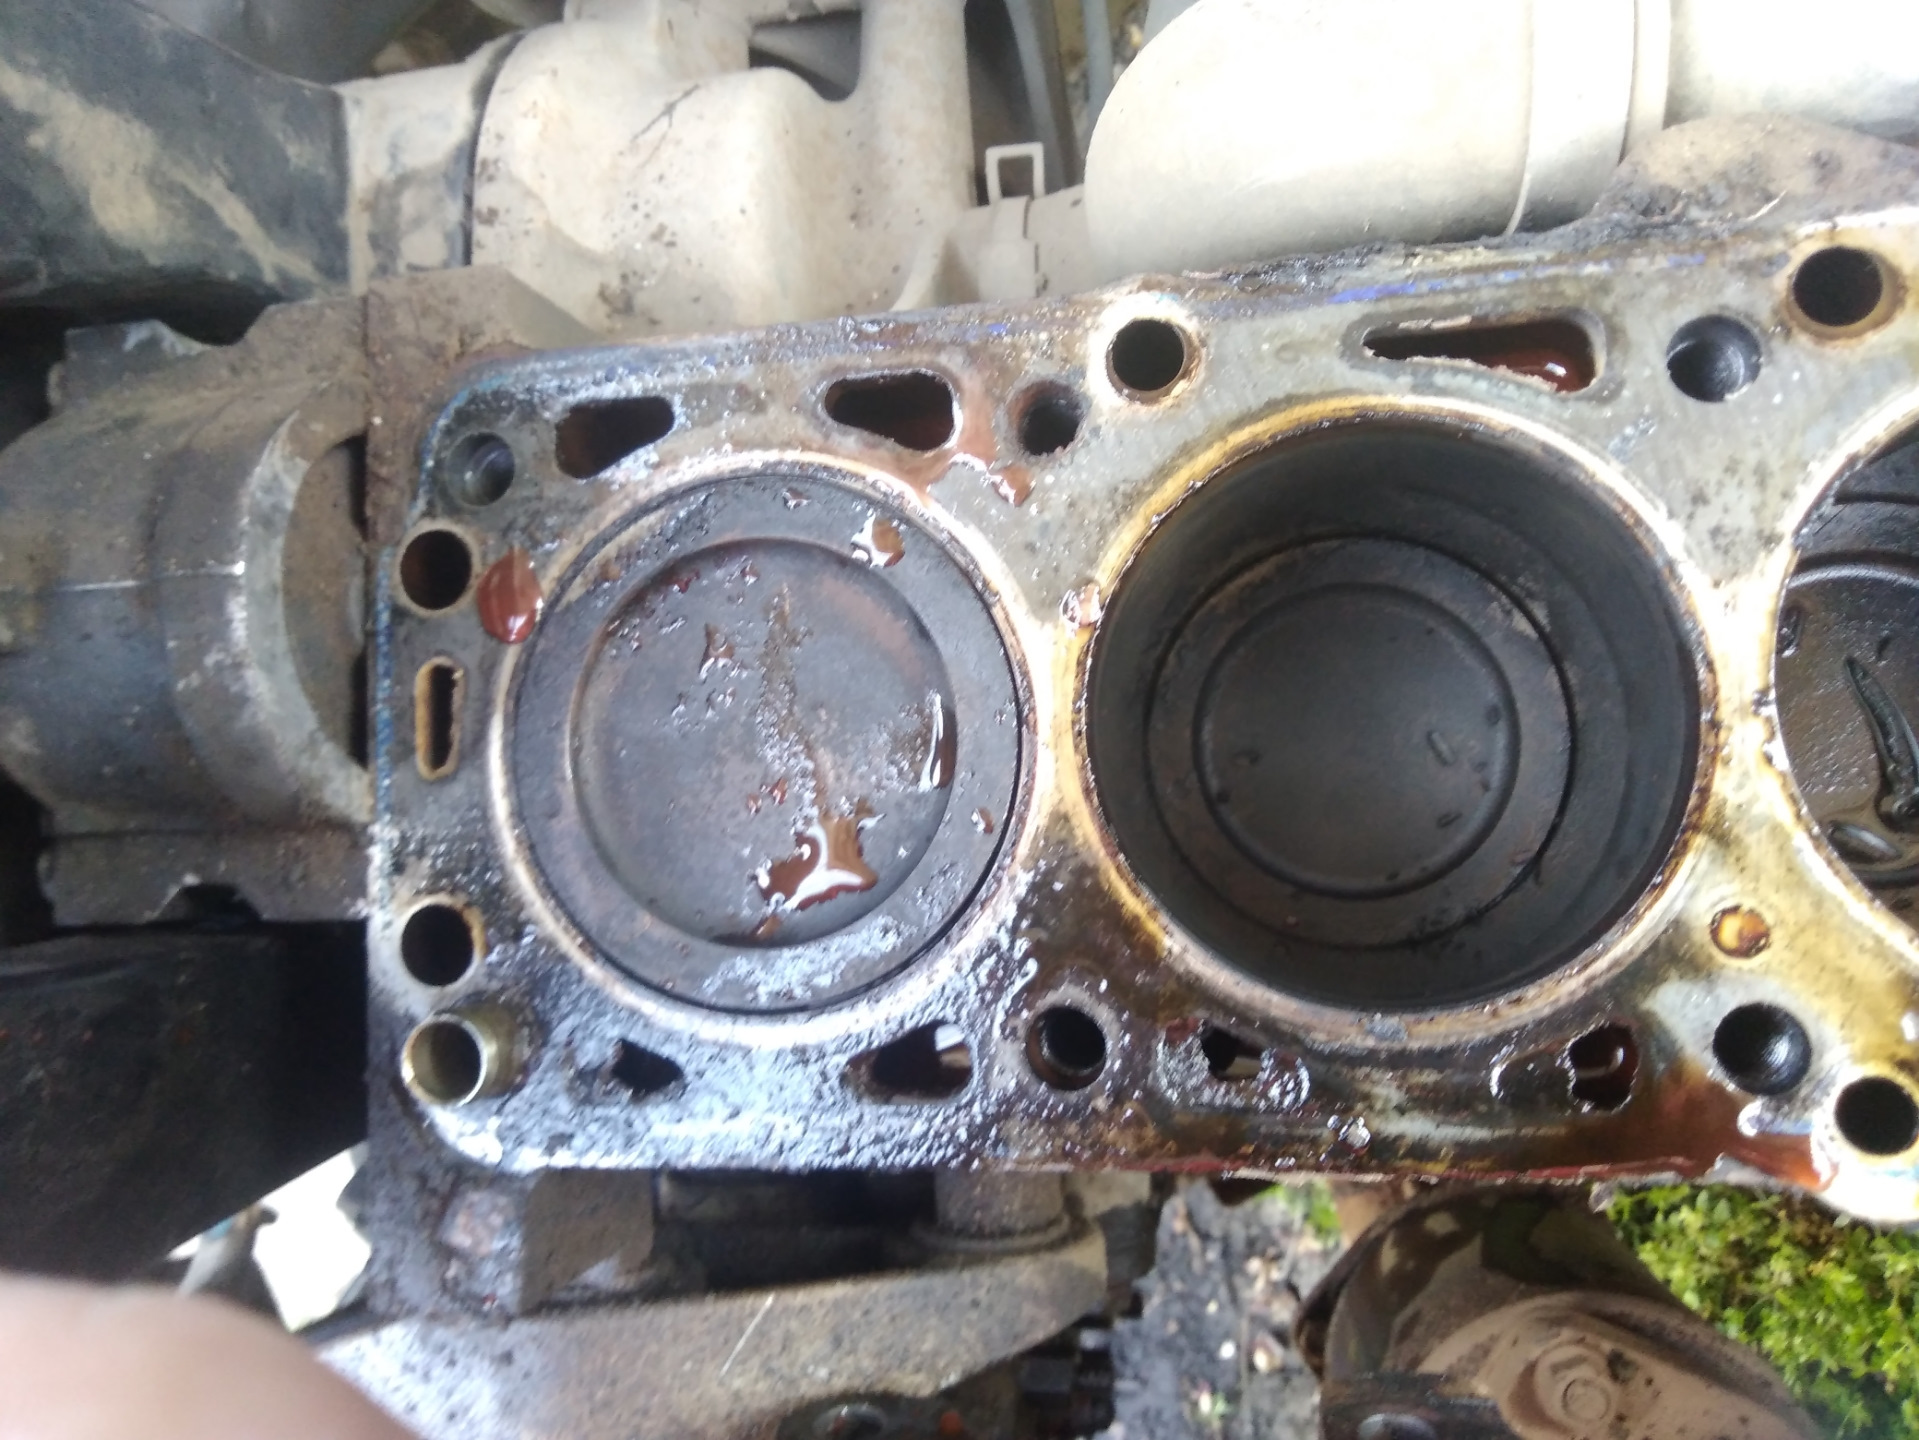 2110 гнет клапана. Загнуло клапана ВАЗ 2110 120 мотор. Клапан пробил поршень ВАЗ 2115. ВАЗ 2107 погнуло клапана. Погнуло клапана на n13b16.